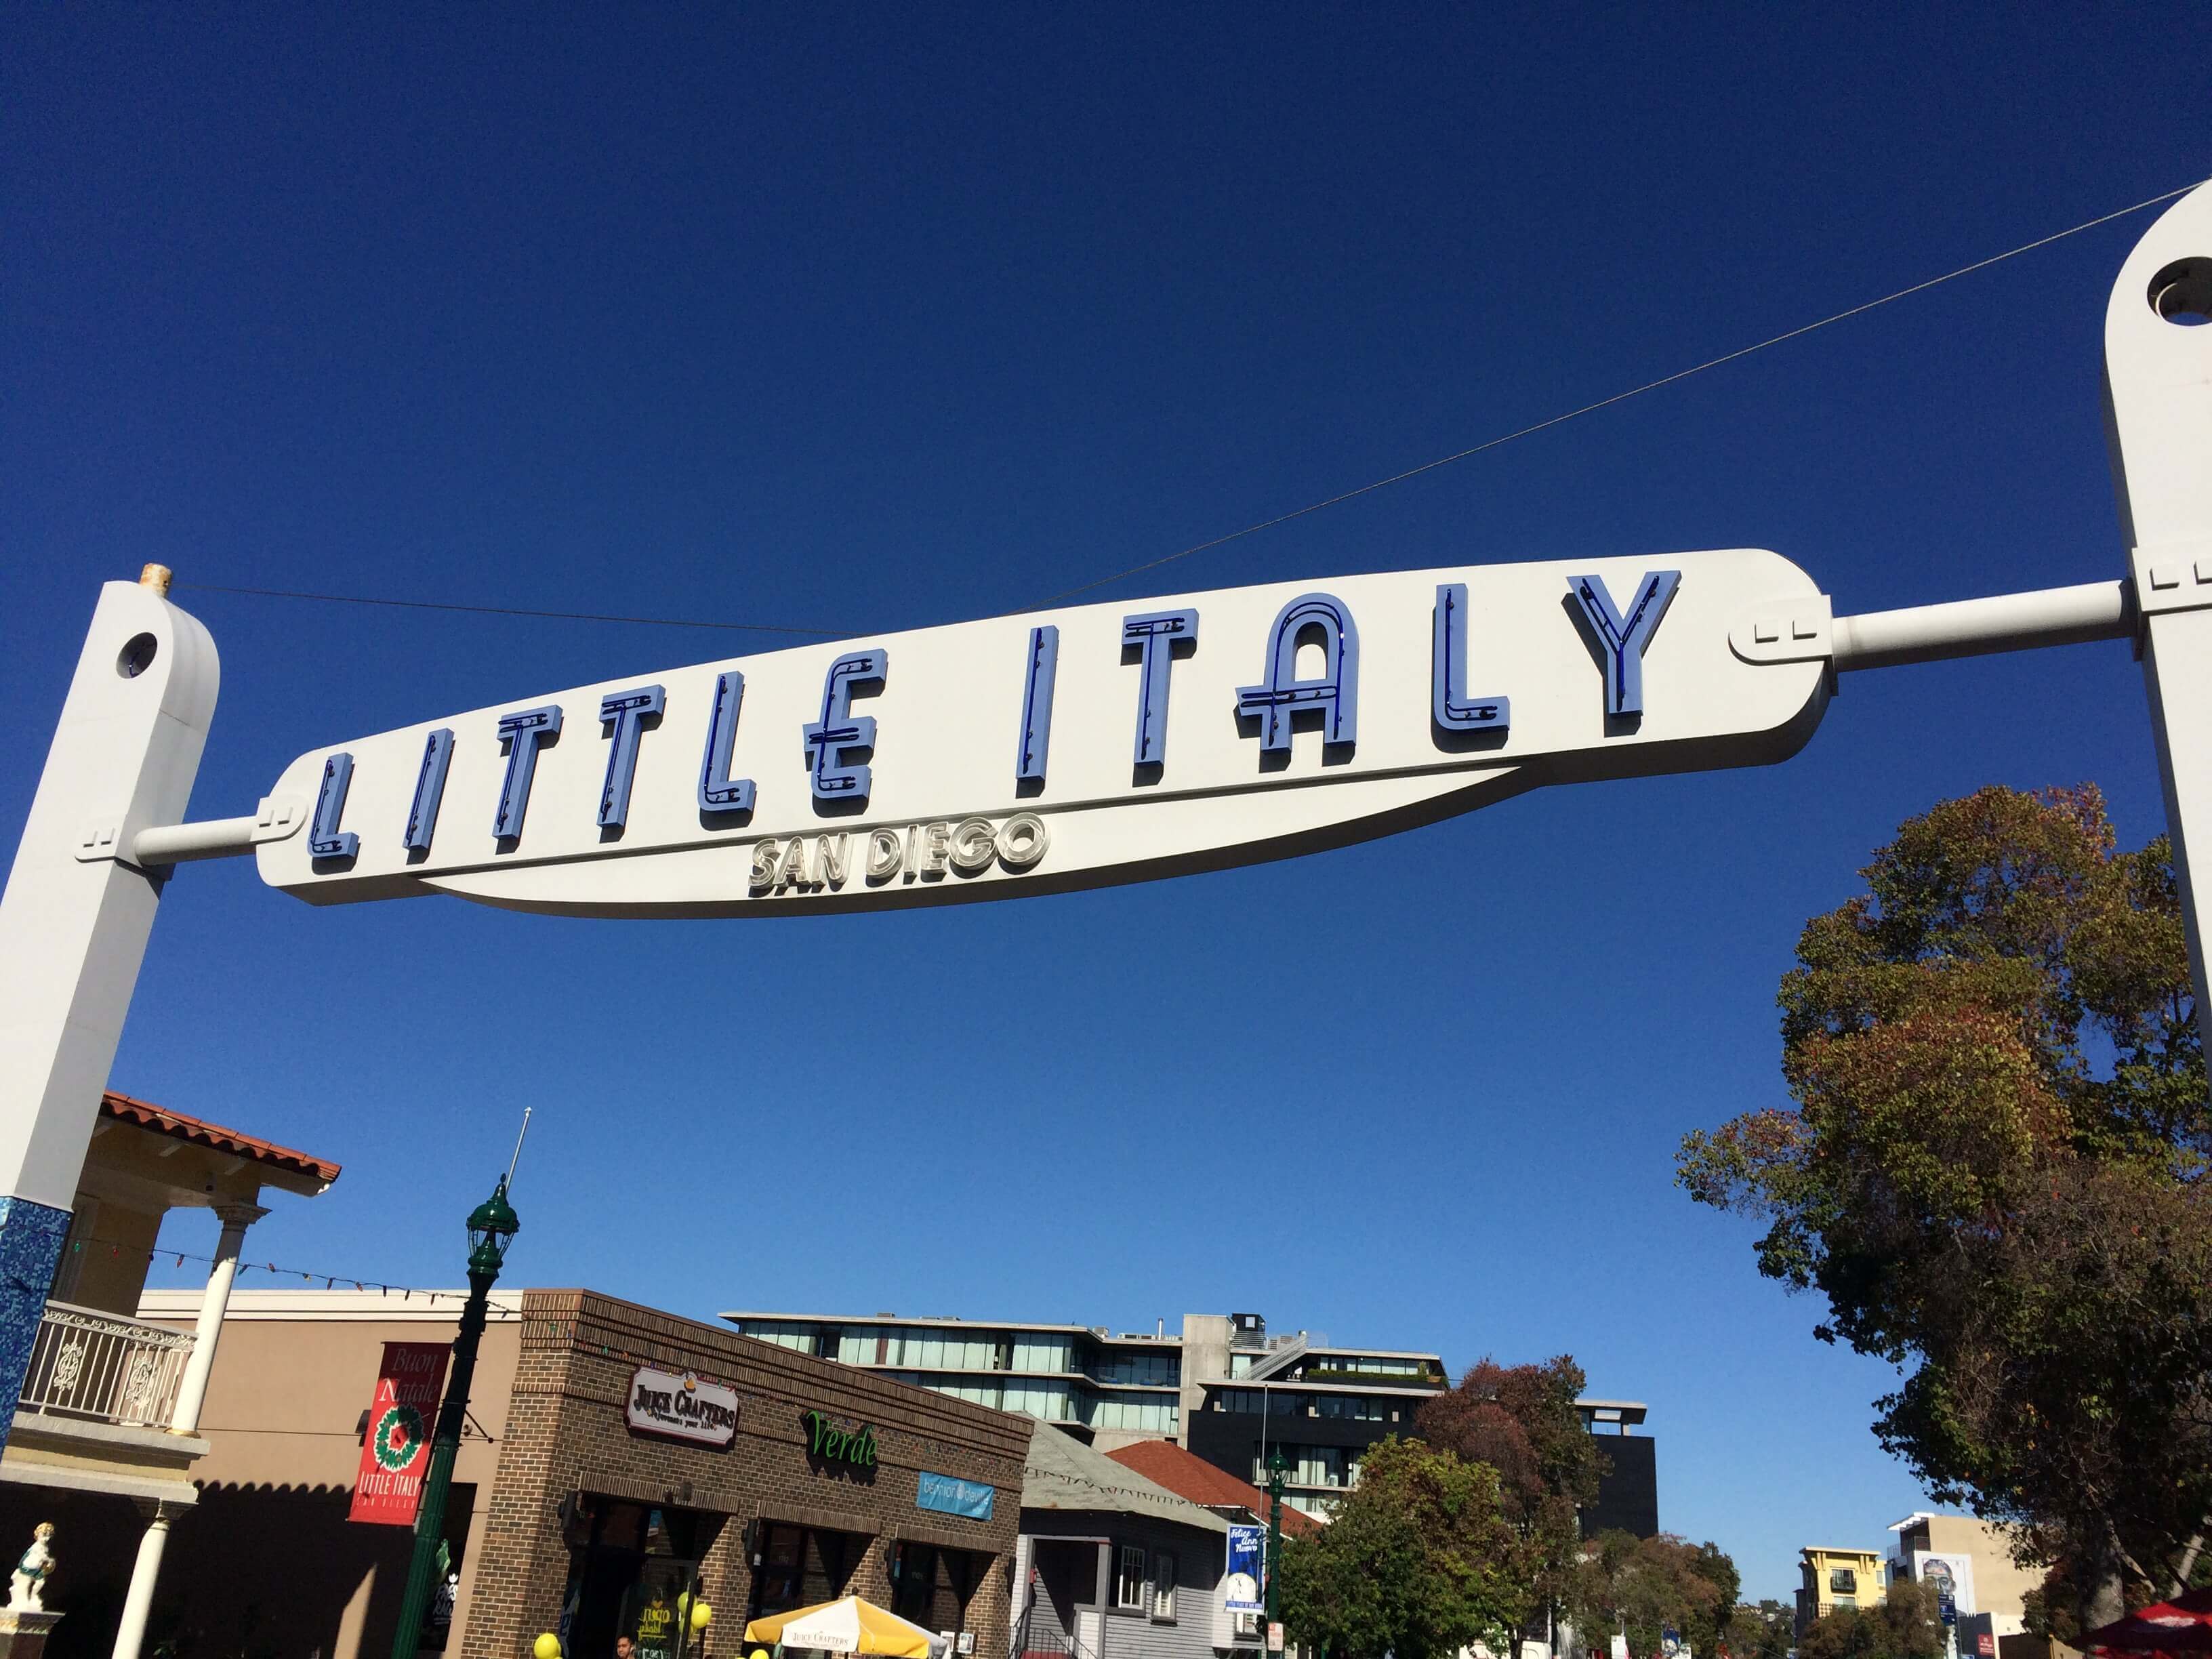 Little Italy, San Diego. Image credit: Rachel Cunningham